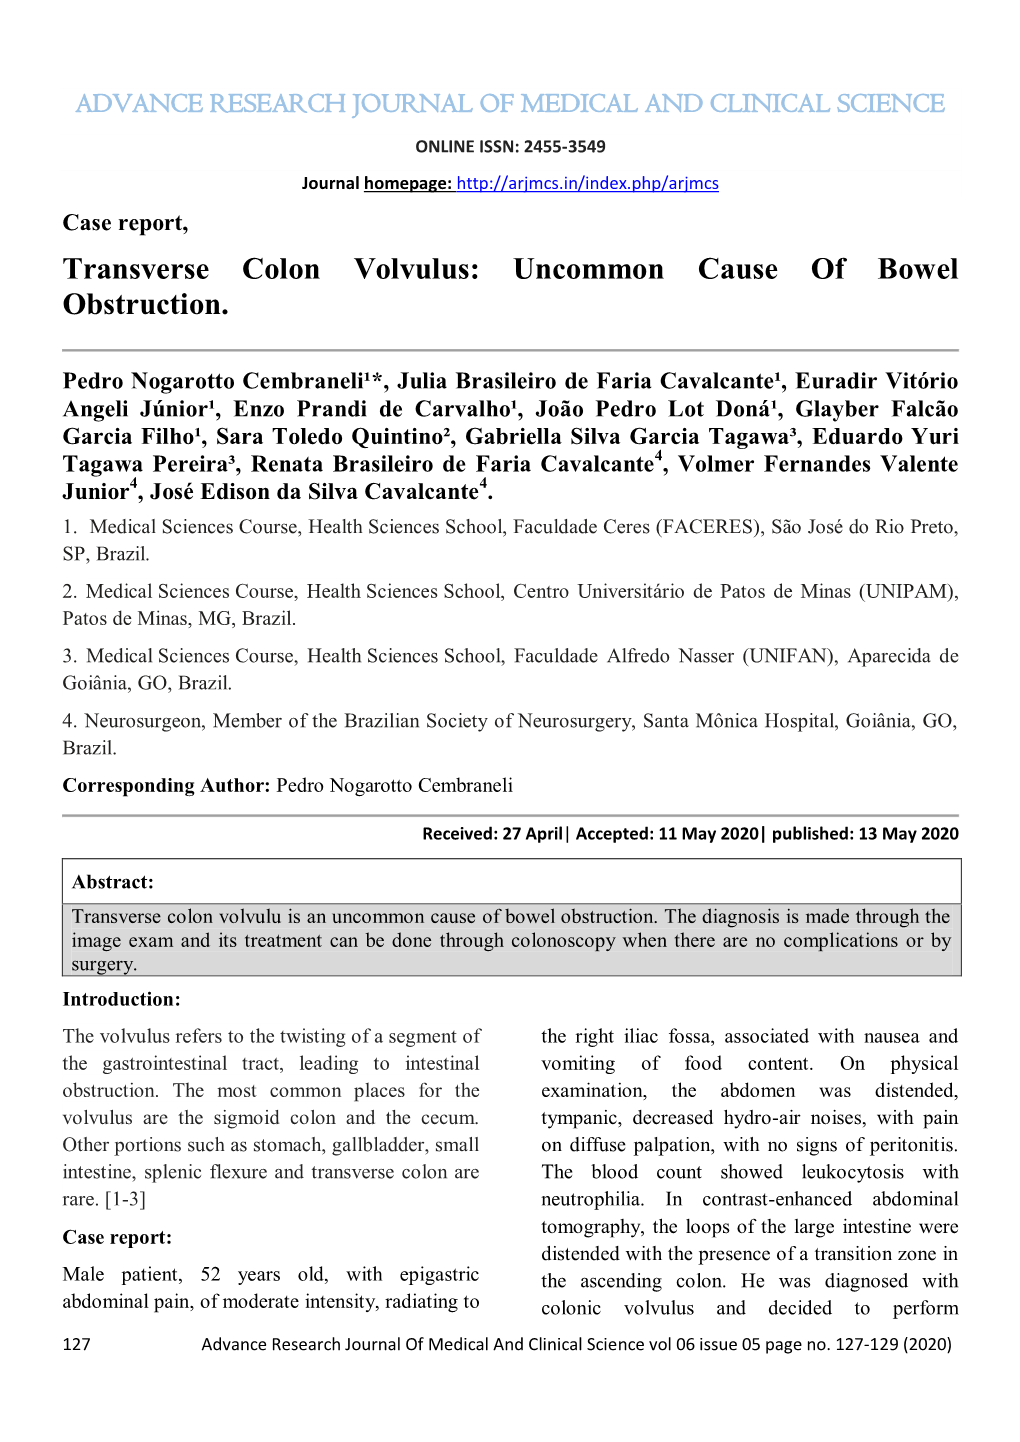 Transverse Colon Volvulus: Uncommon Cause of Bowel Obstruction